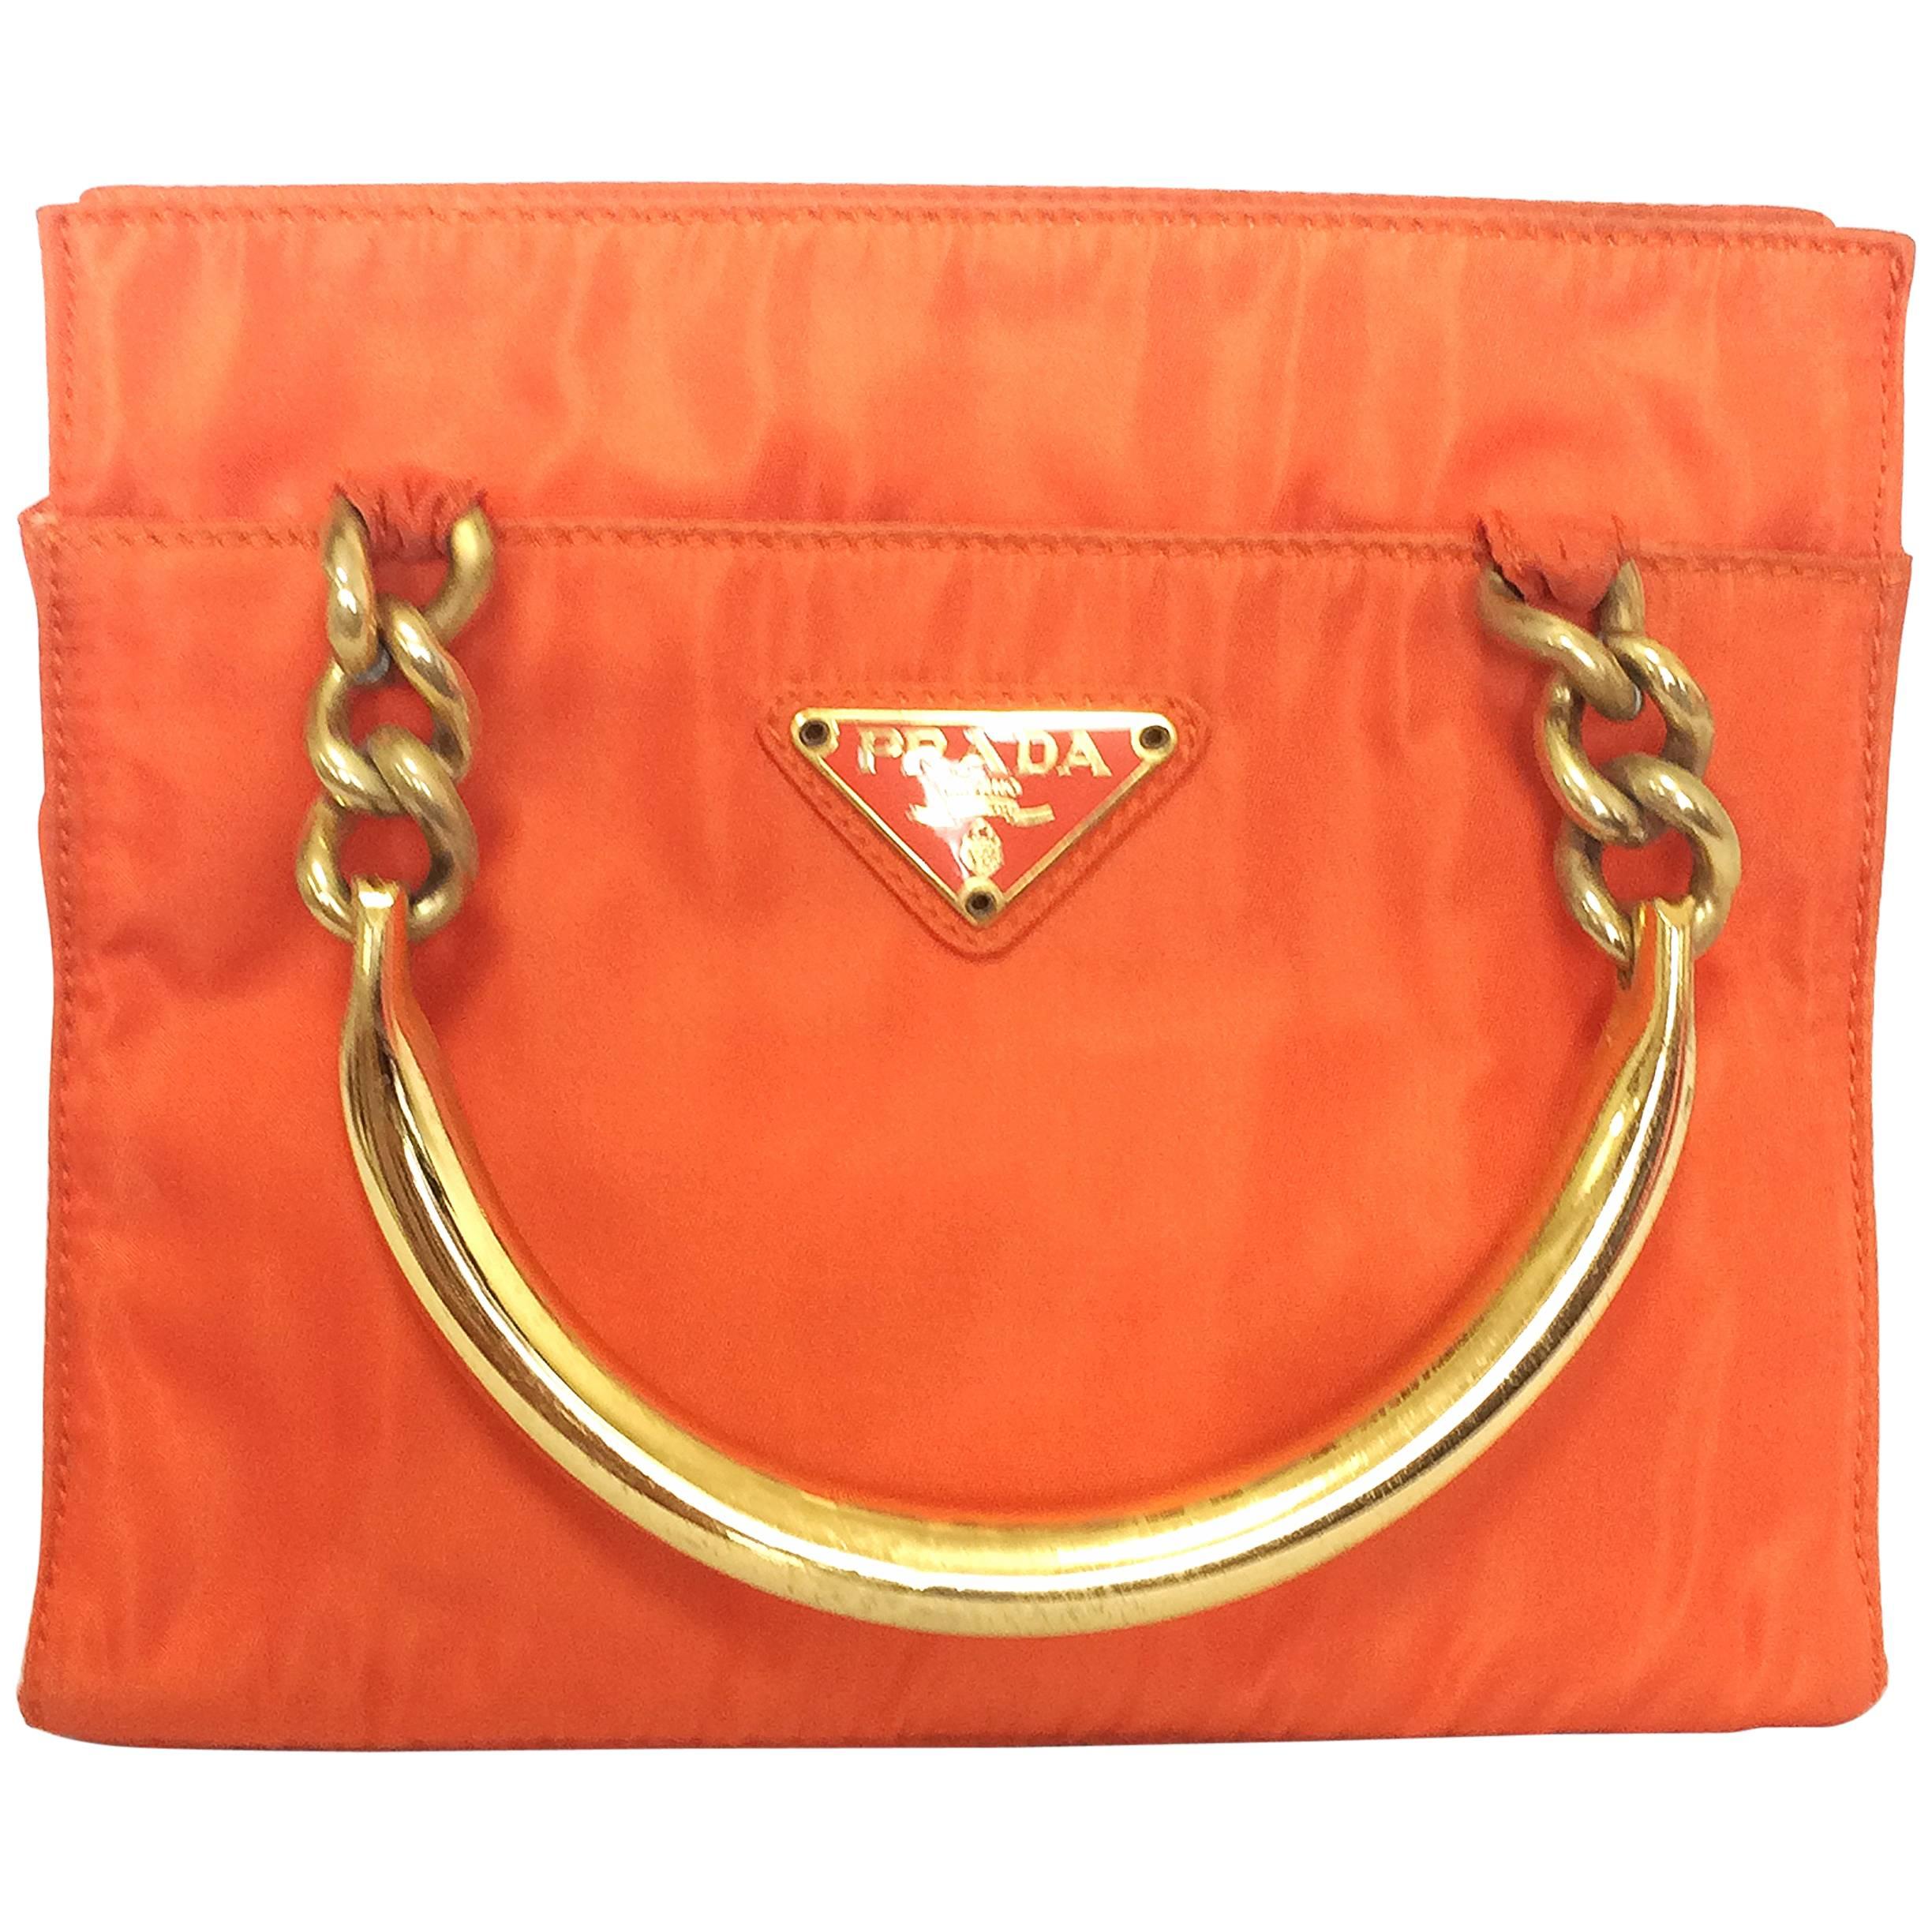 Vintage PRADA orange nylon mini tote bag with golden chain and metallic handles.